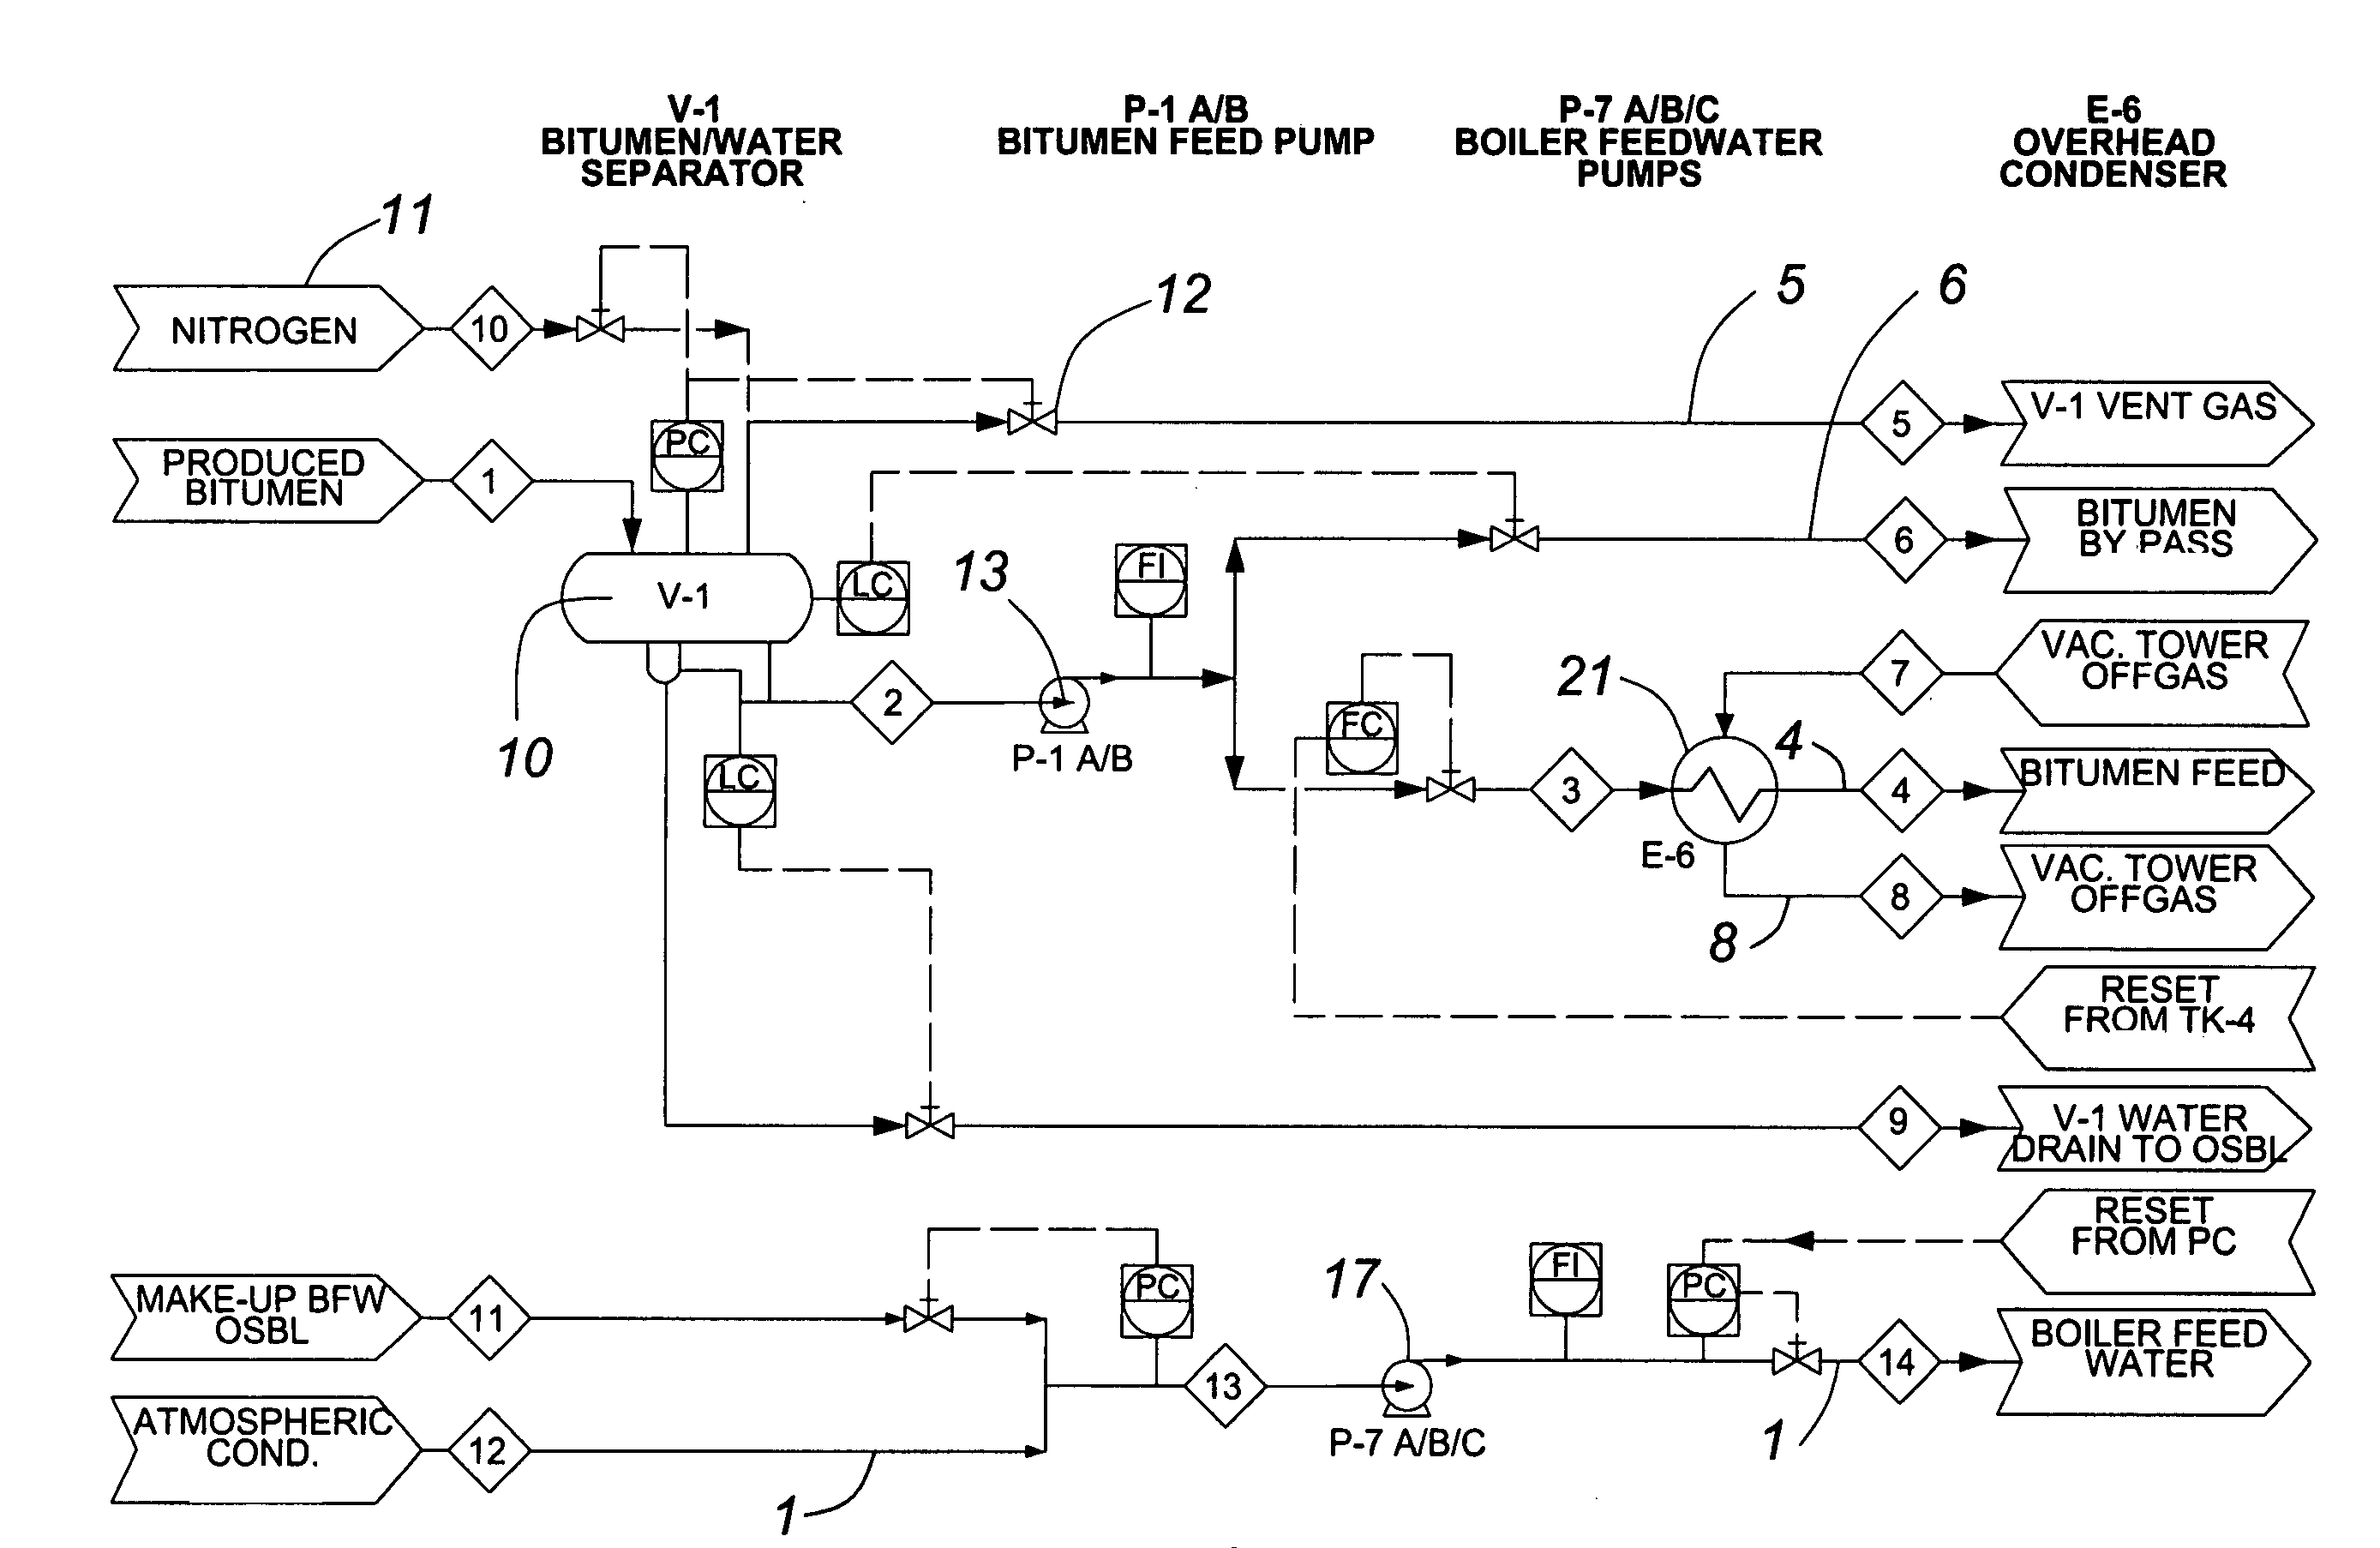 Steam generation apparatus and method